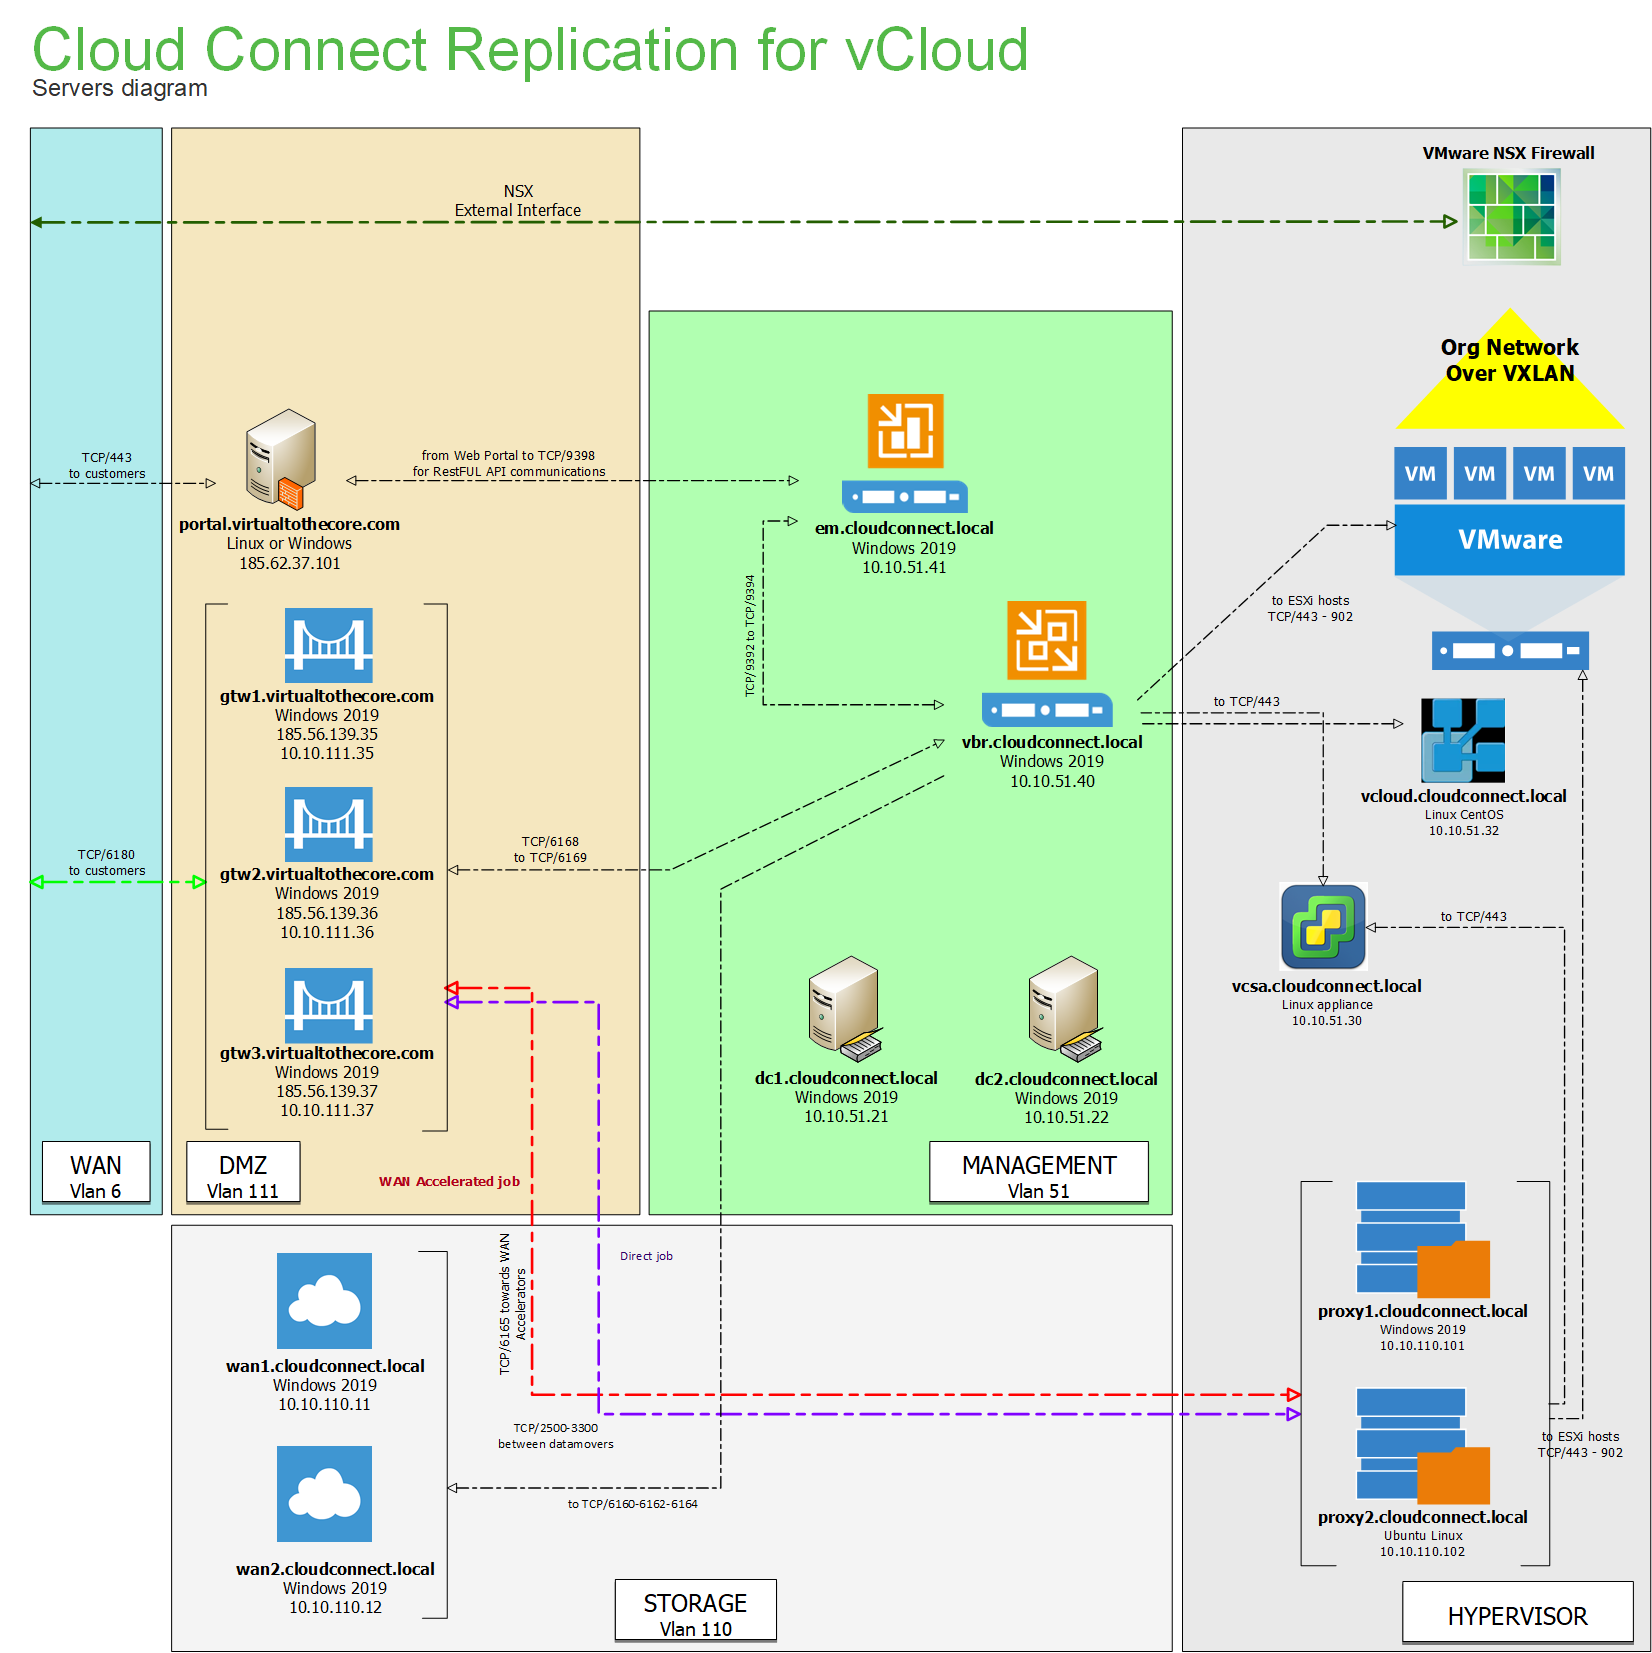 Veeam Cloud Connect Replication servers diagram for vCloud Director